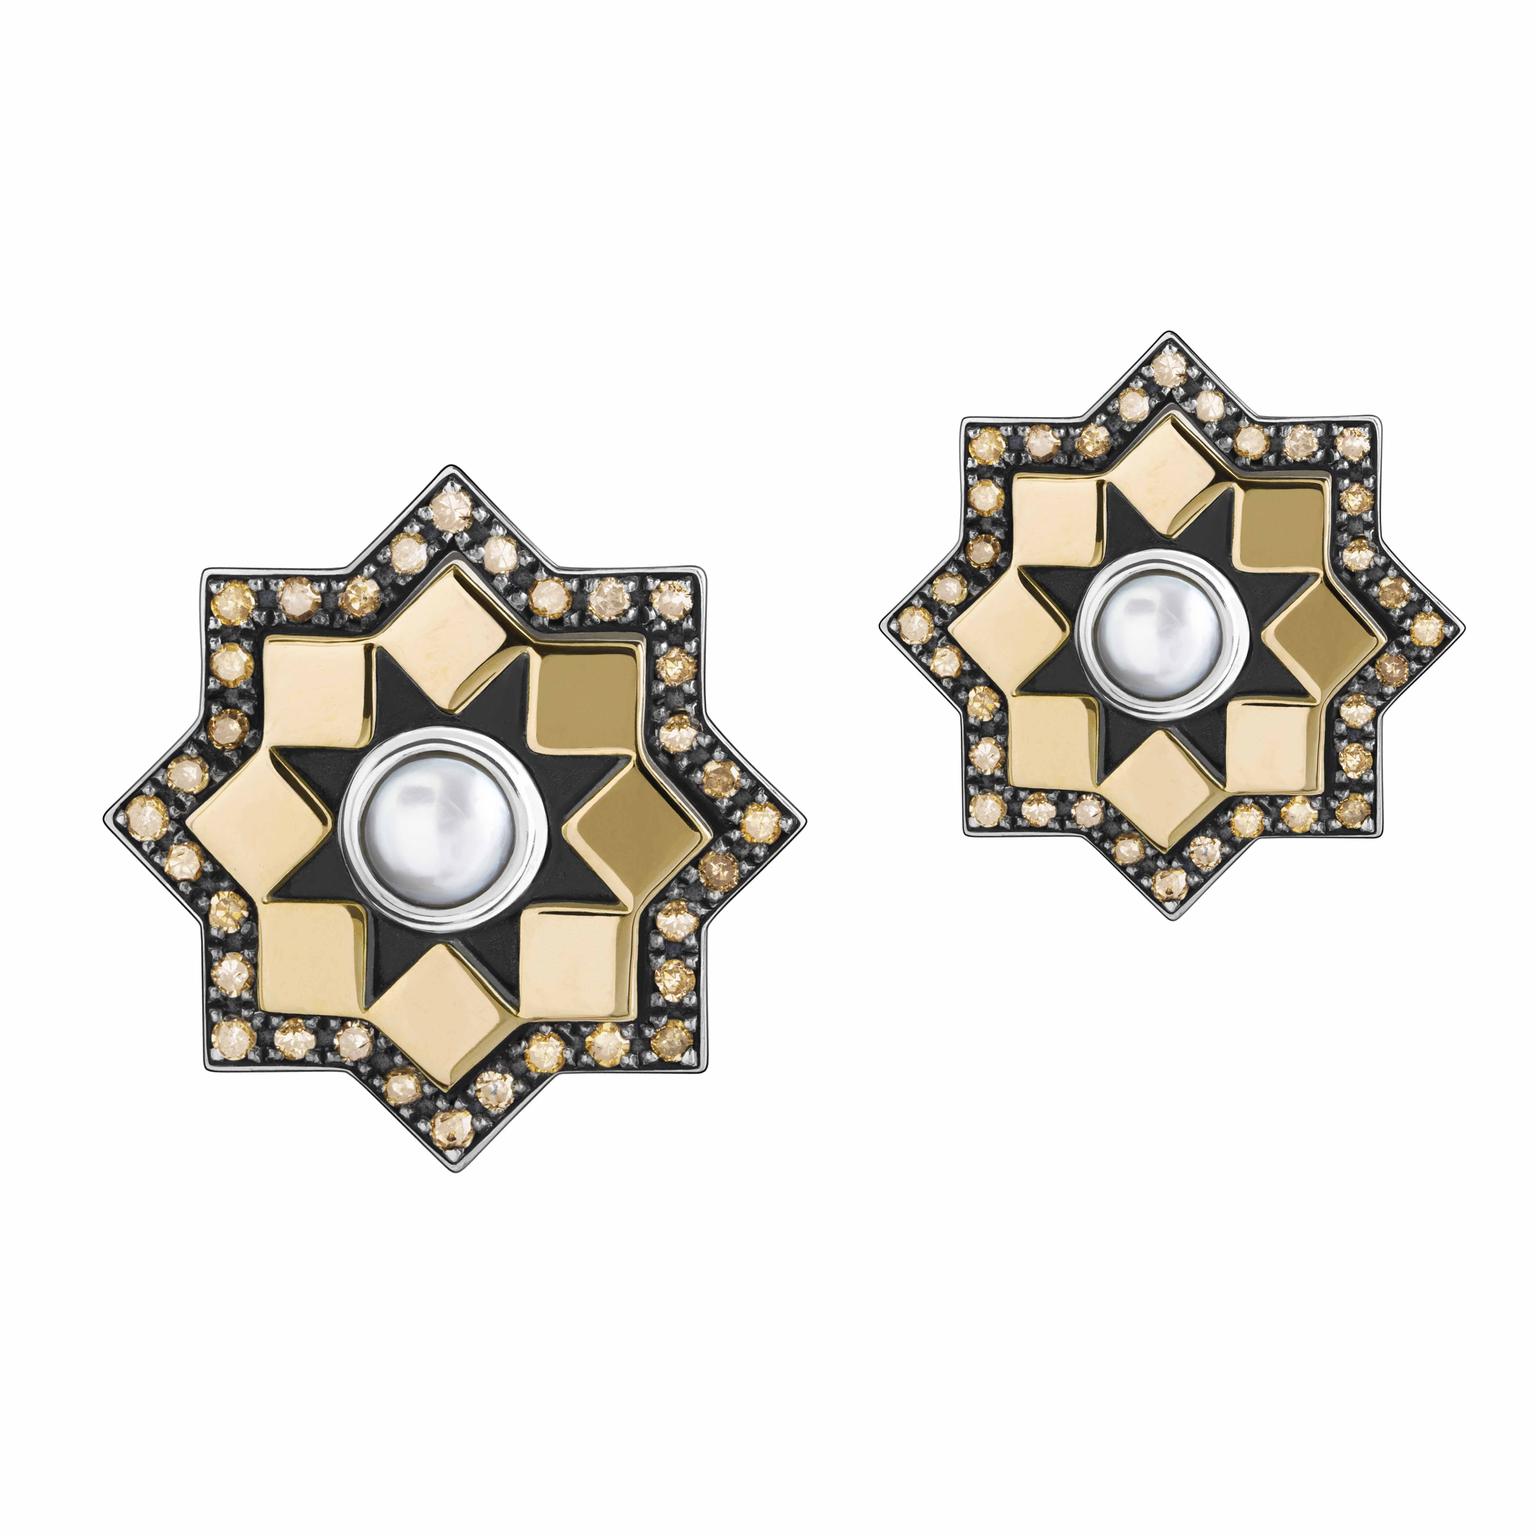 Mamluk earrings by Azza Fahmy